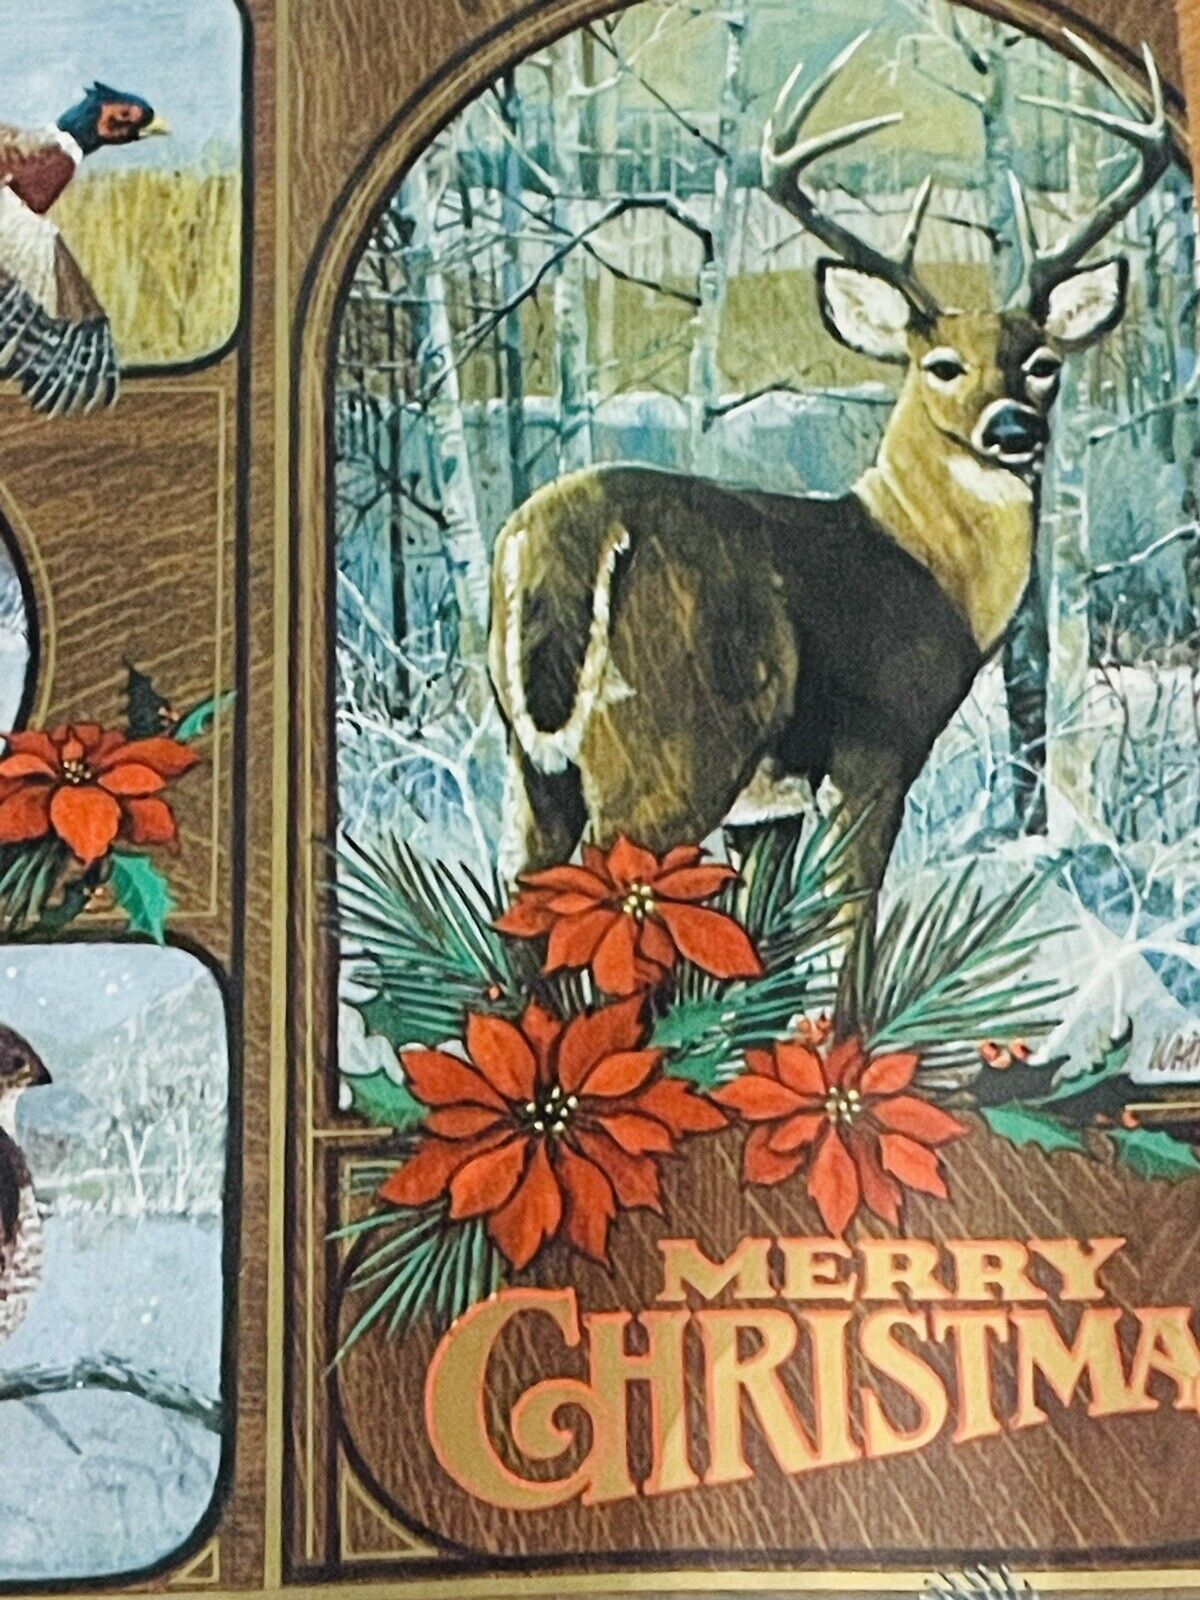 VTG MERRY CHRISTMAS HALLMARK WRAPPING PAPER GIFT WRAP 1960 DEER PHEASANT NOS